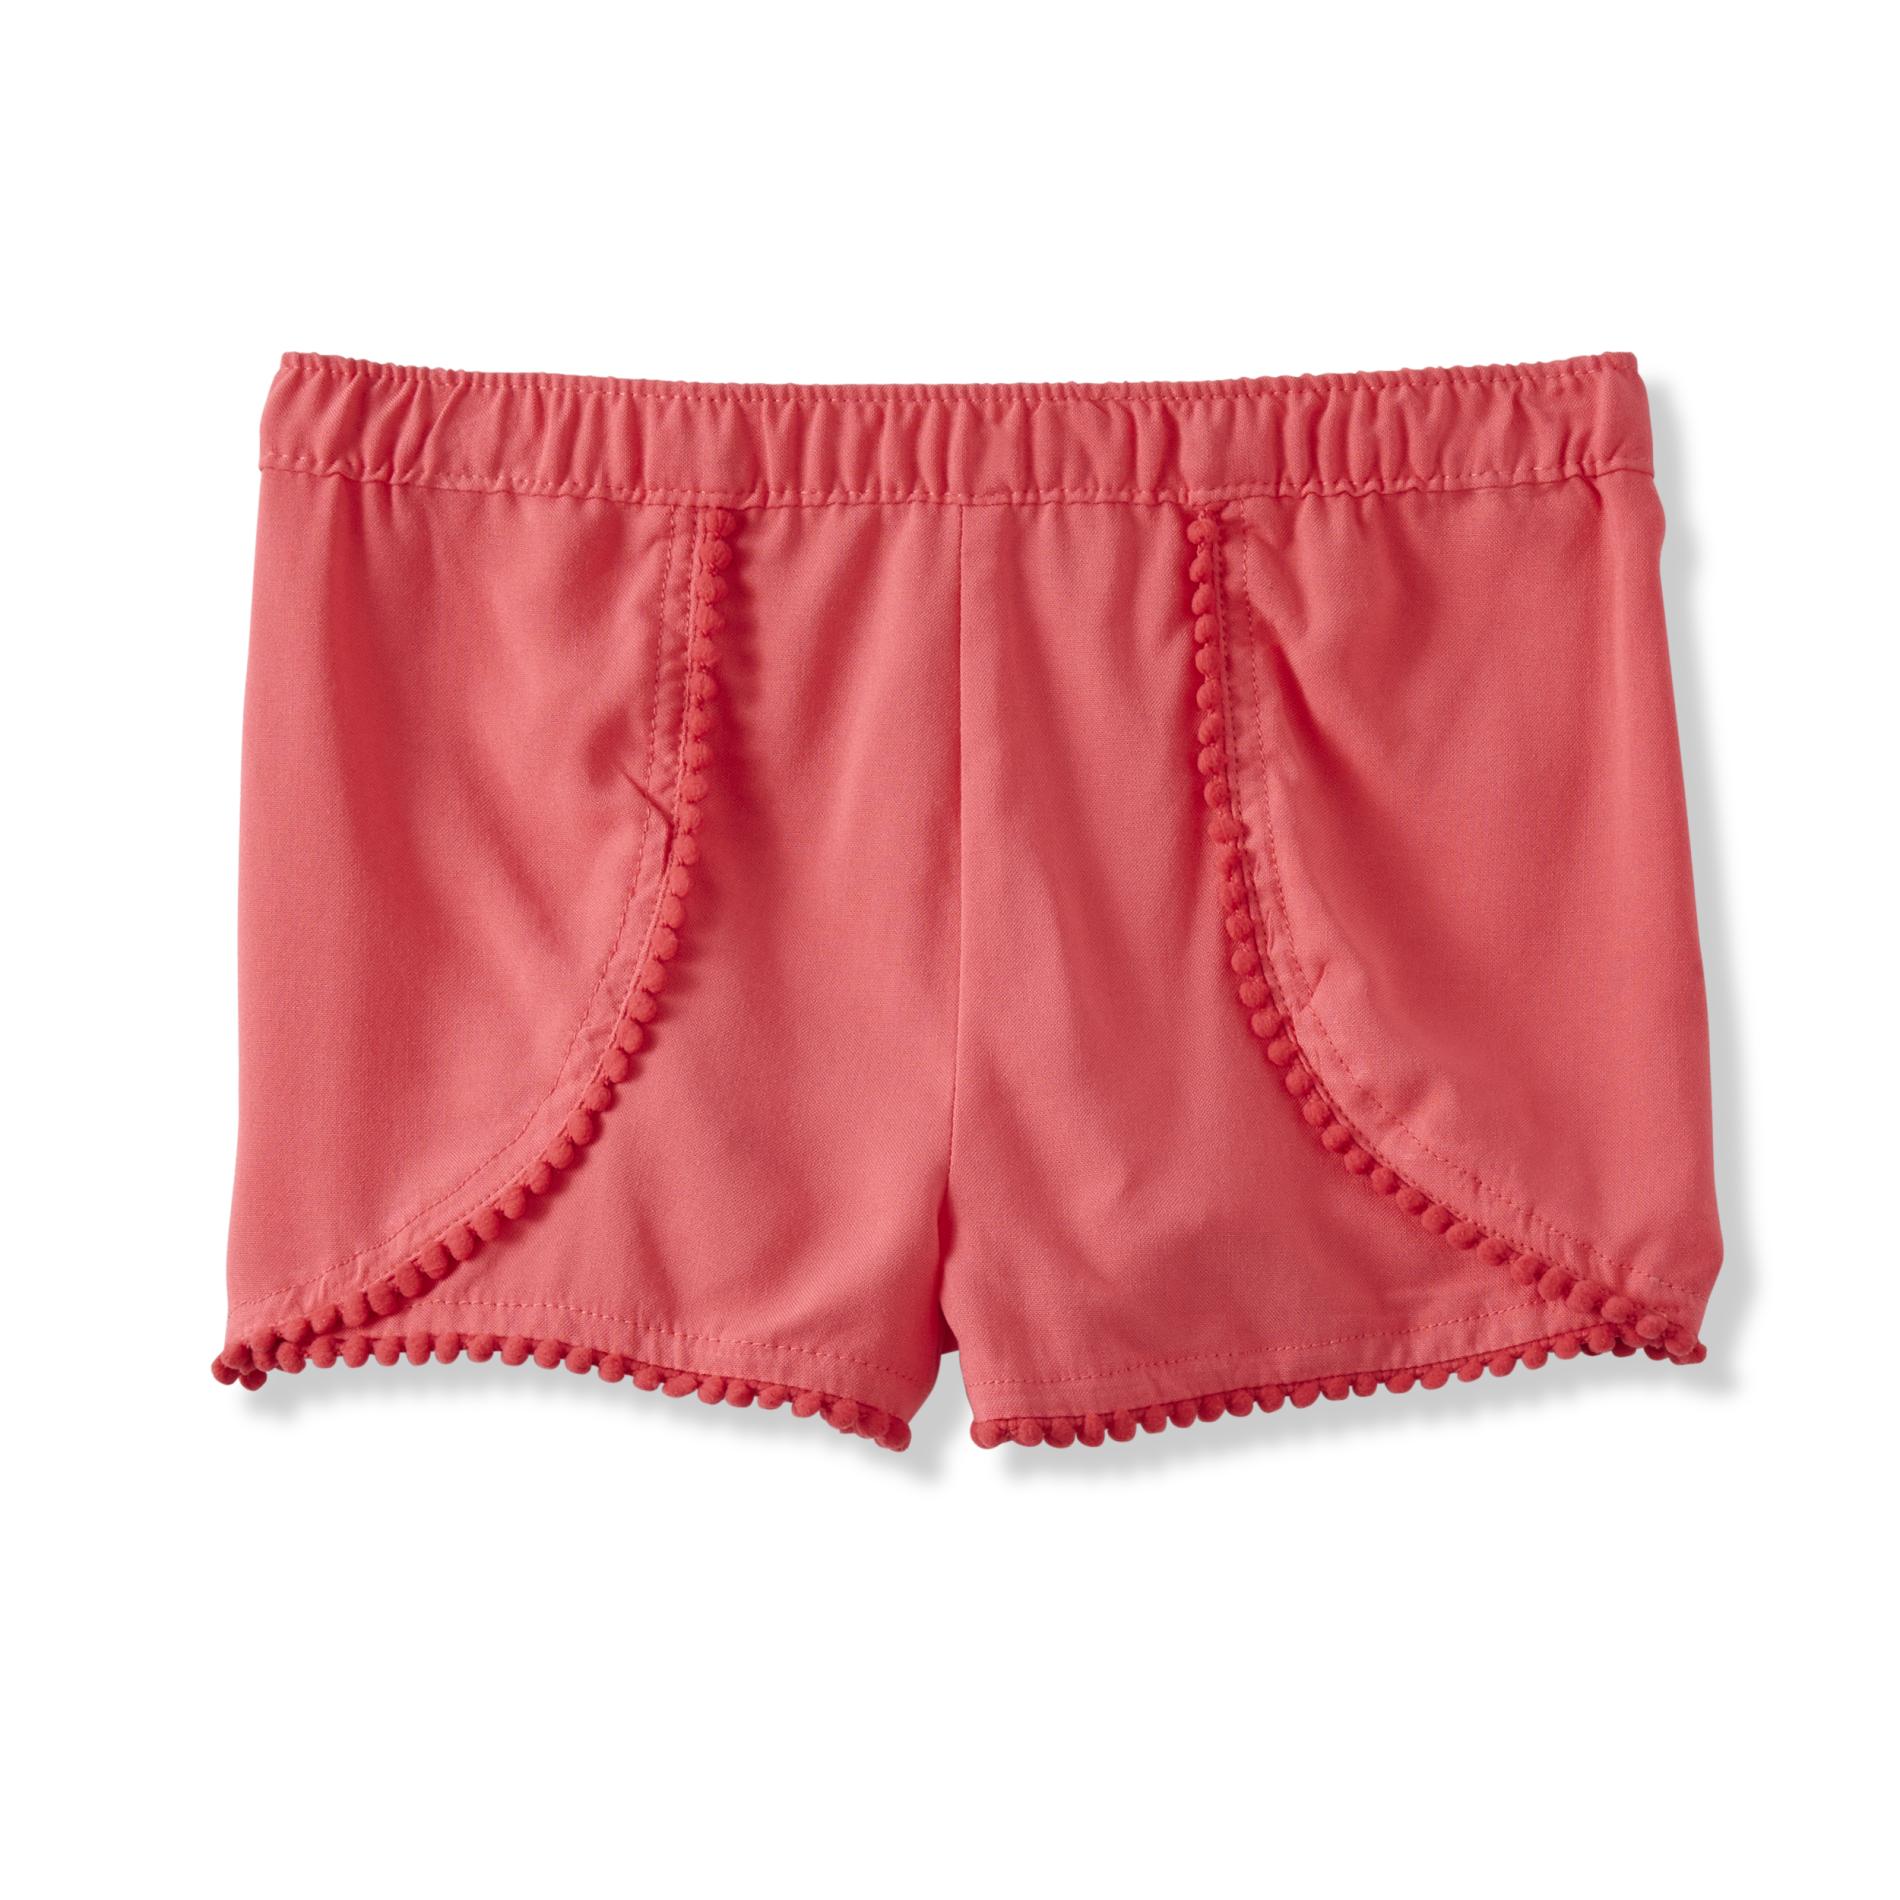 Toughskins Infant Girls' Pompom Shorts